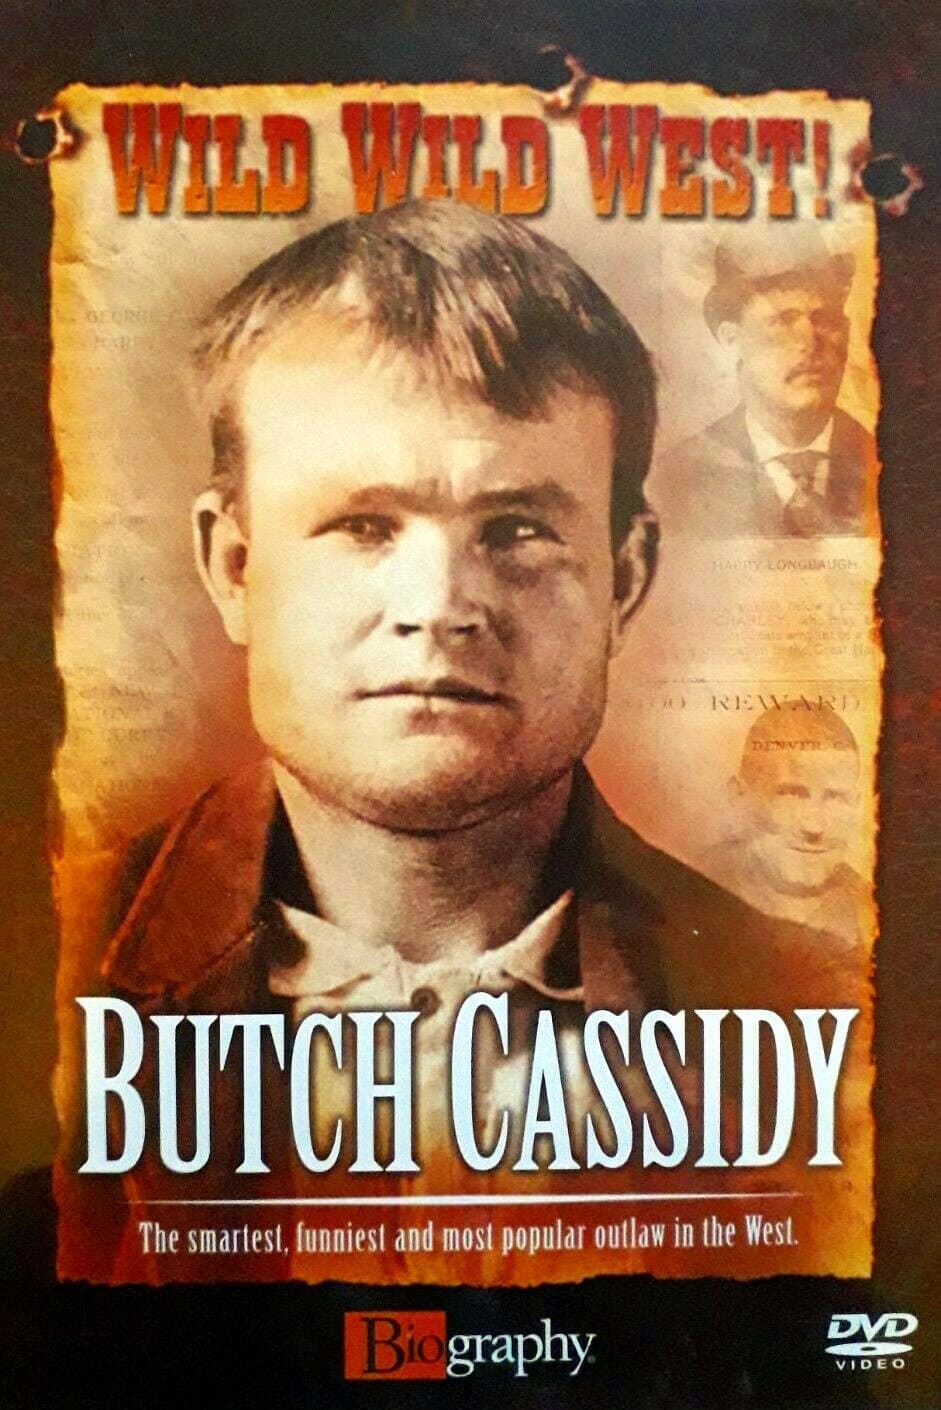 Wild Wild West: Butch Cassidy